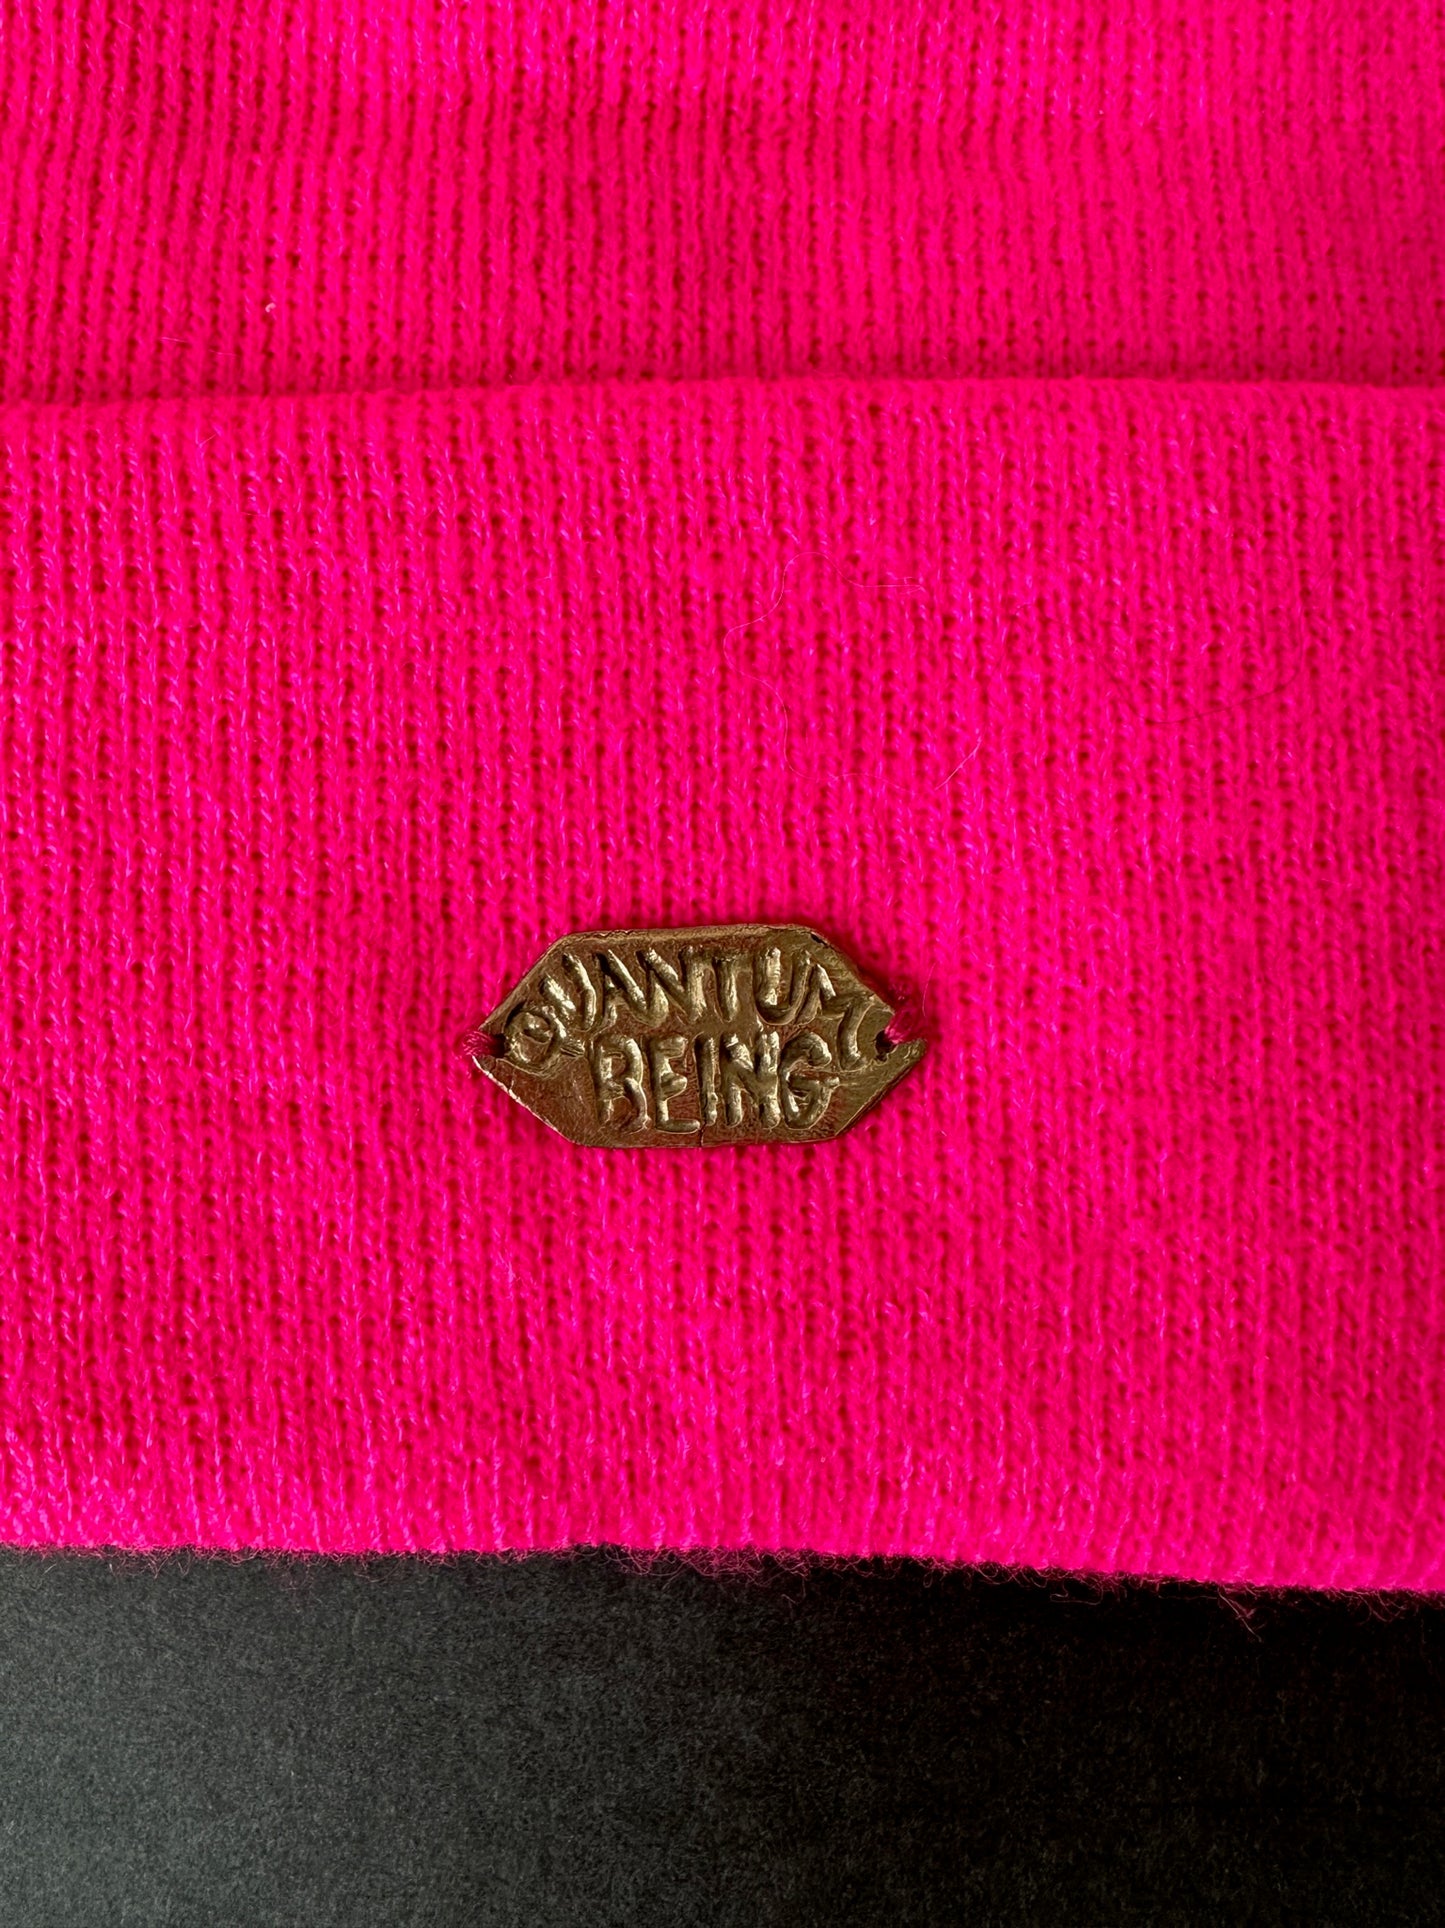 024. Bronze “QUANTUM BEING” Beanie in hot pink